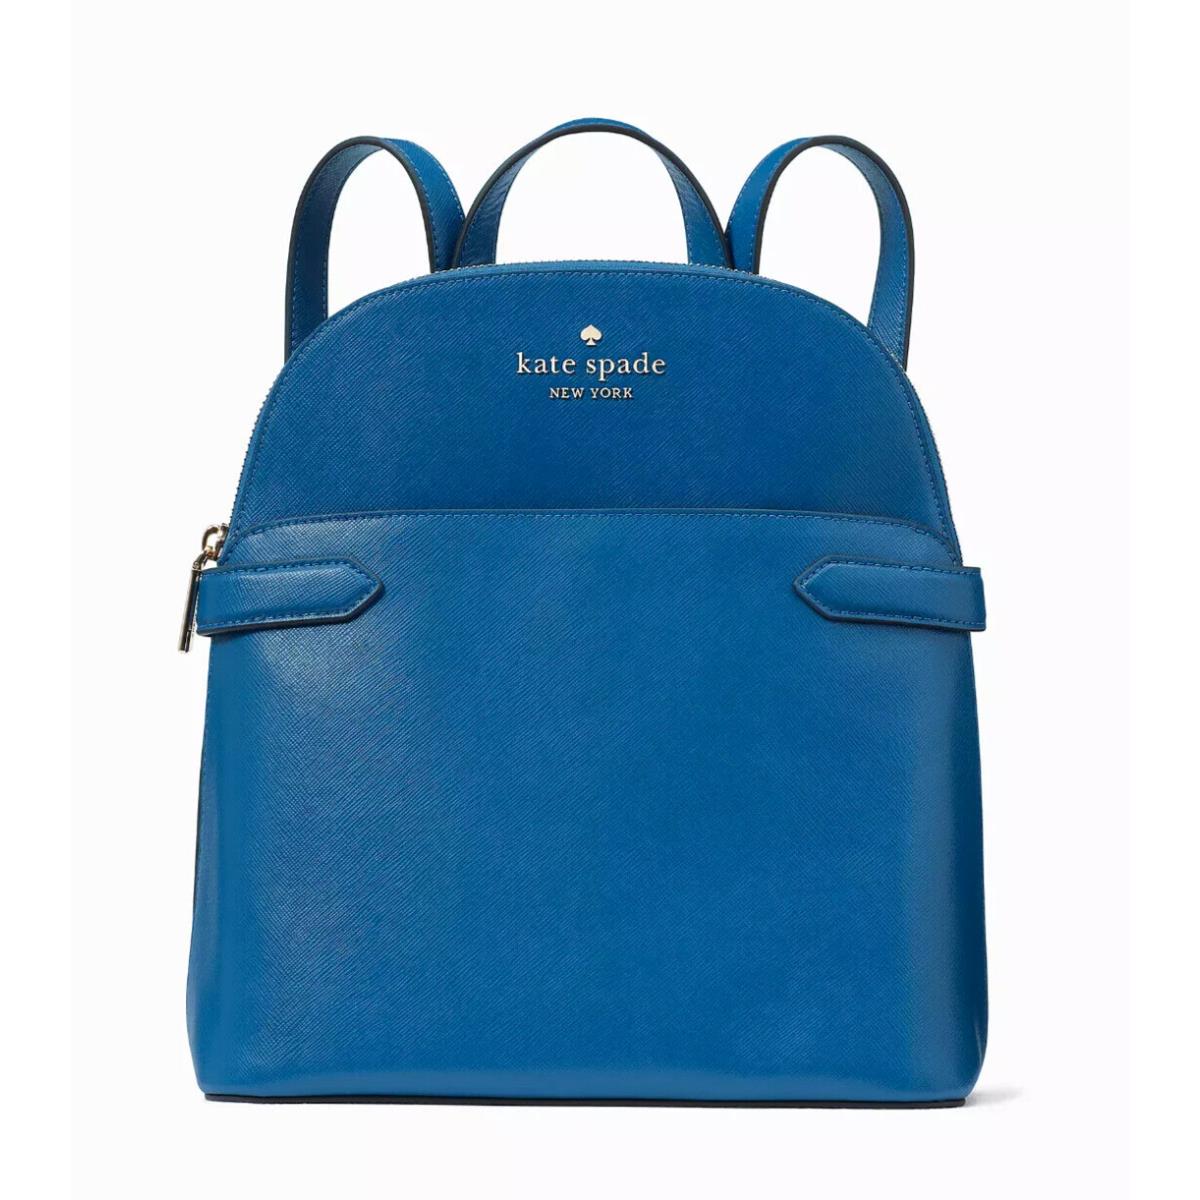 Kate Spade New York Staci Dome Leather Backpack Shoulder Bag Purse